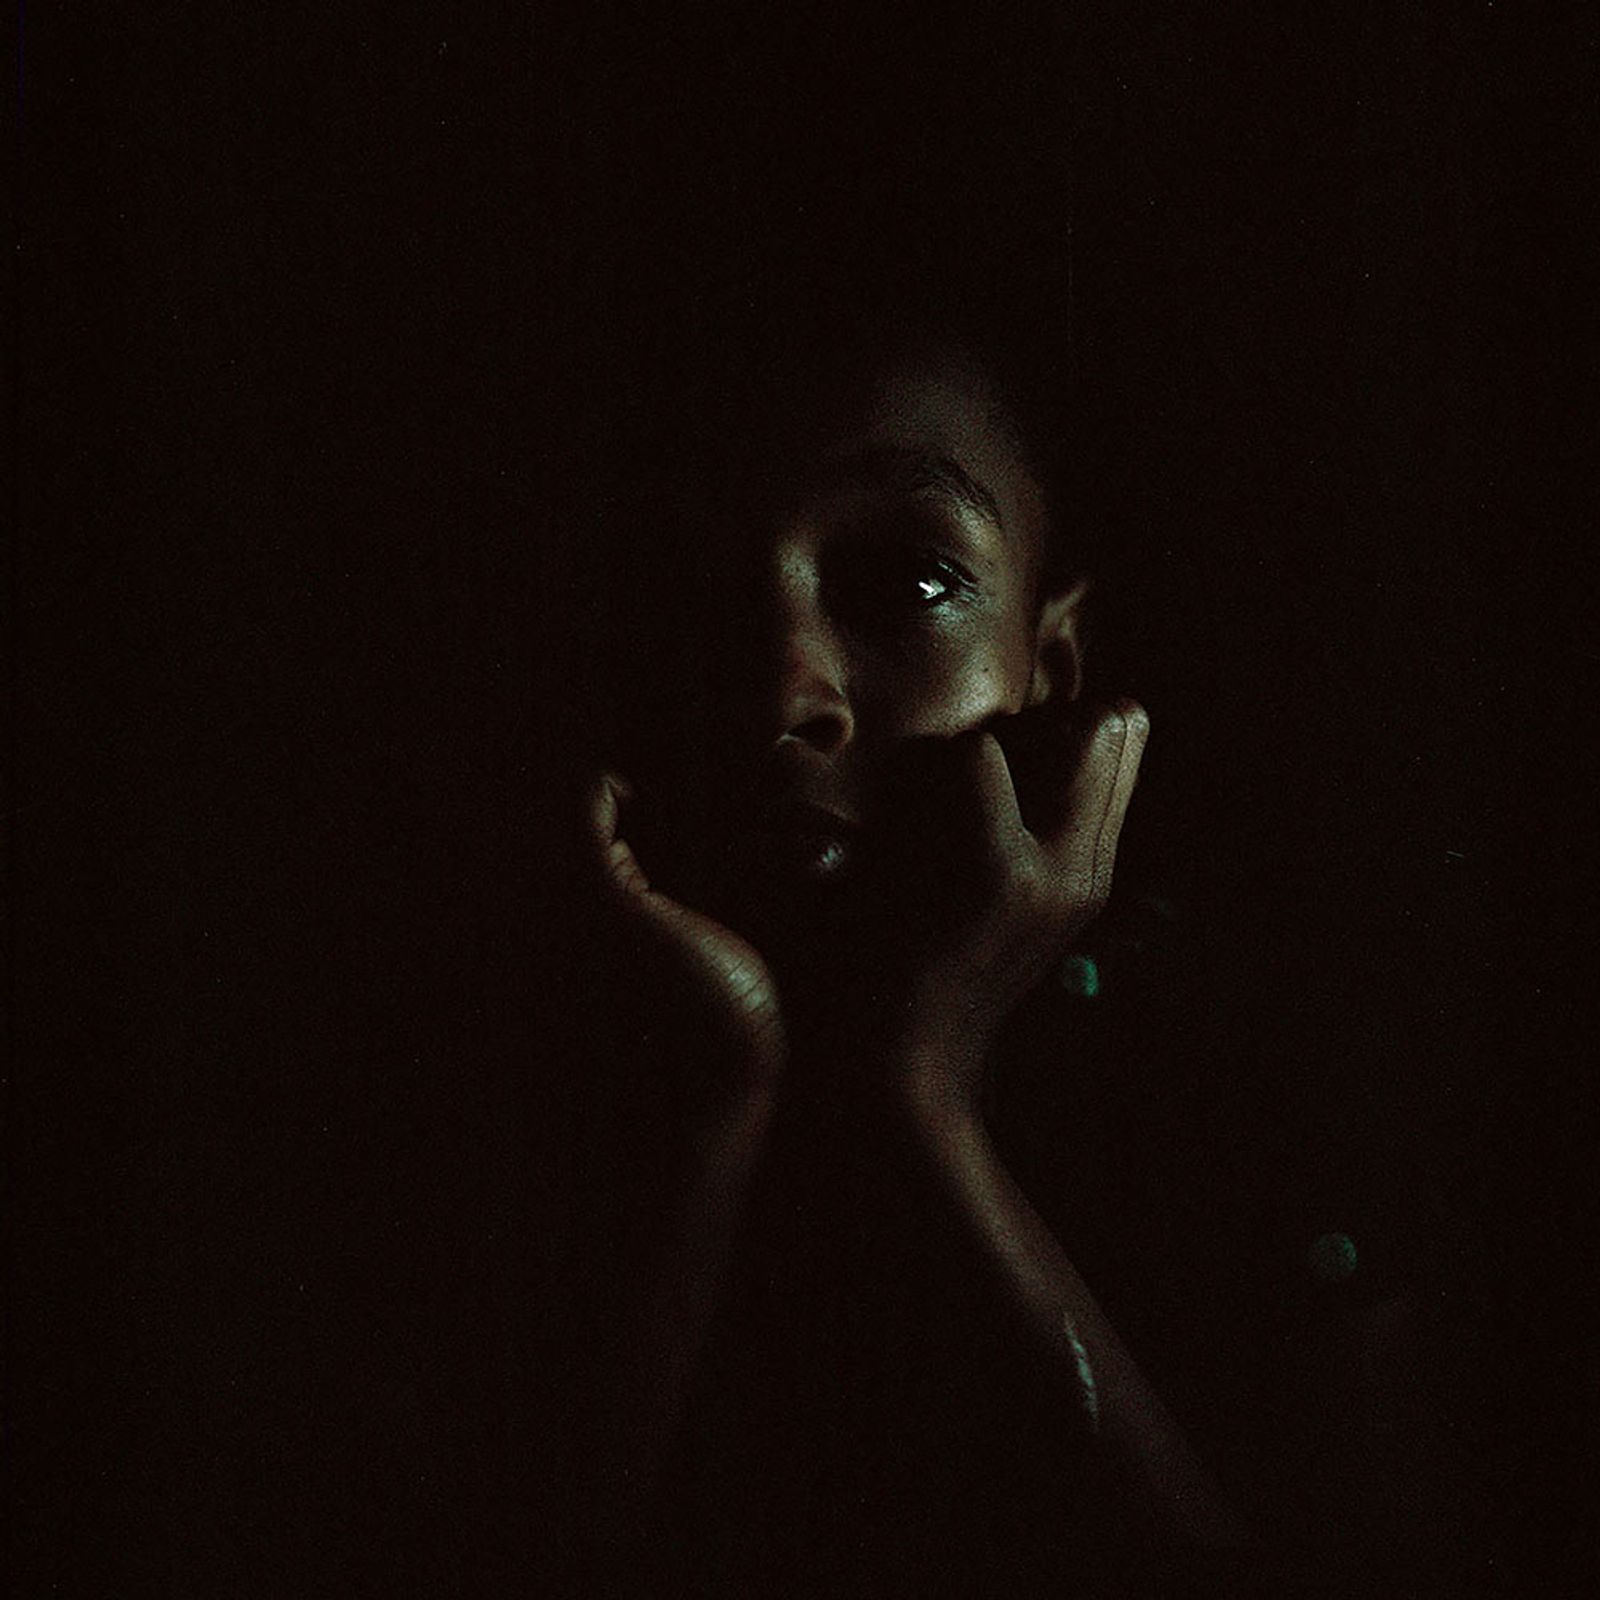 © Cynthia MaiWa Sitei - Image from the Wundanyi photography project